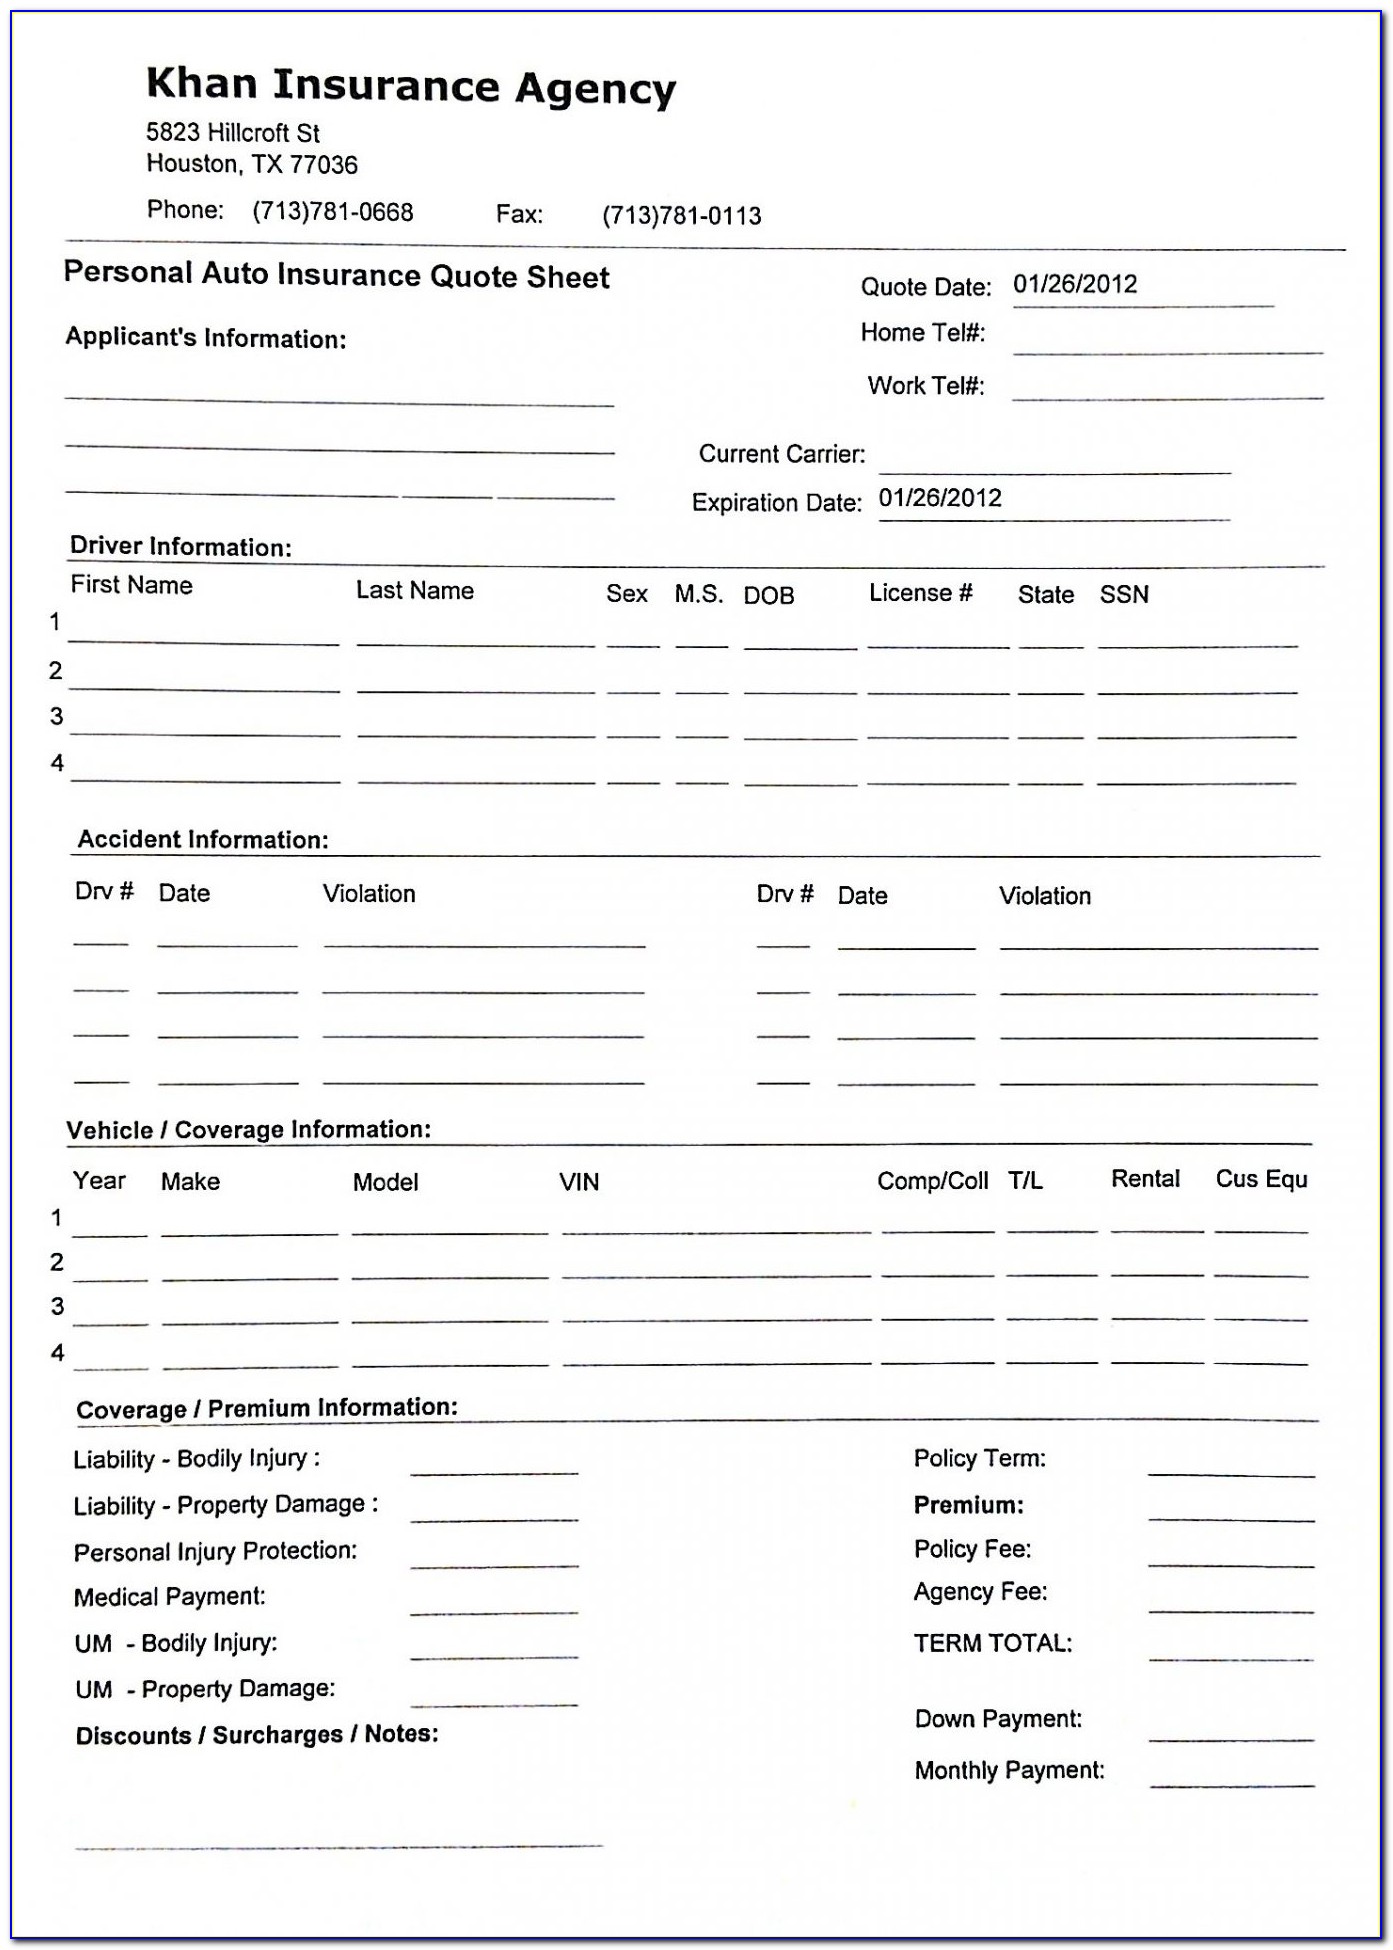 Cms 1500 Form Free Printable